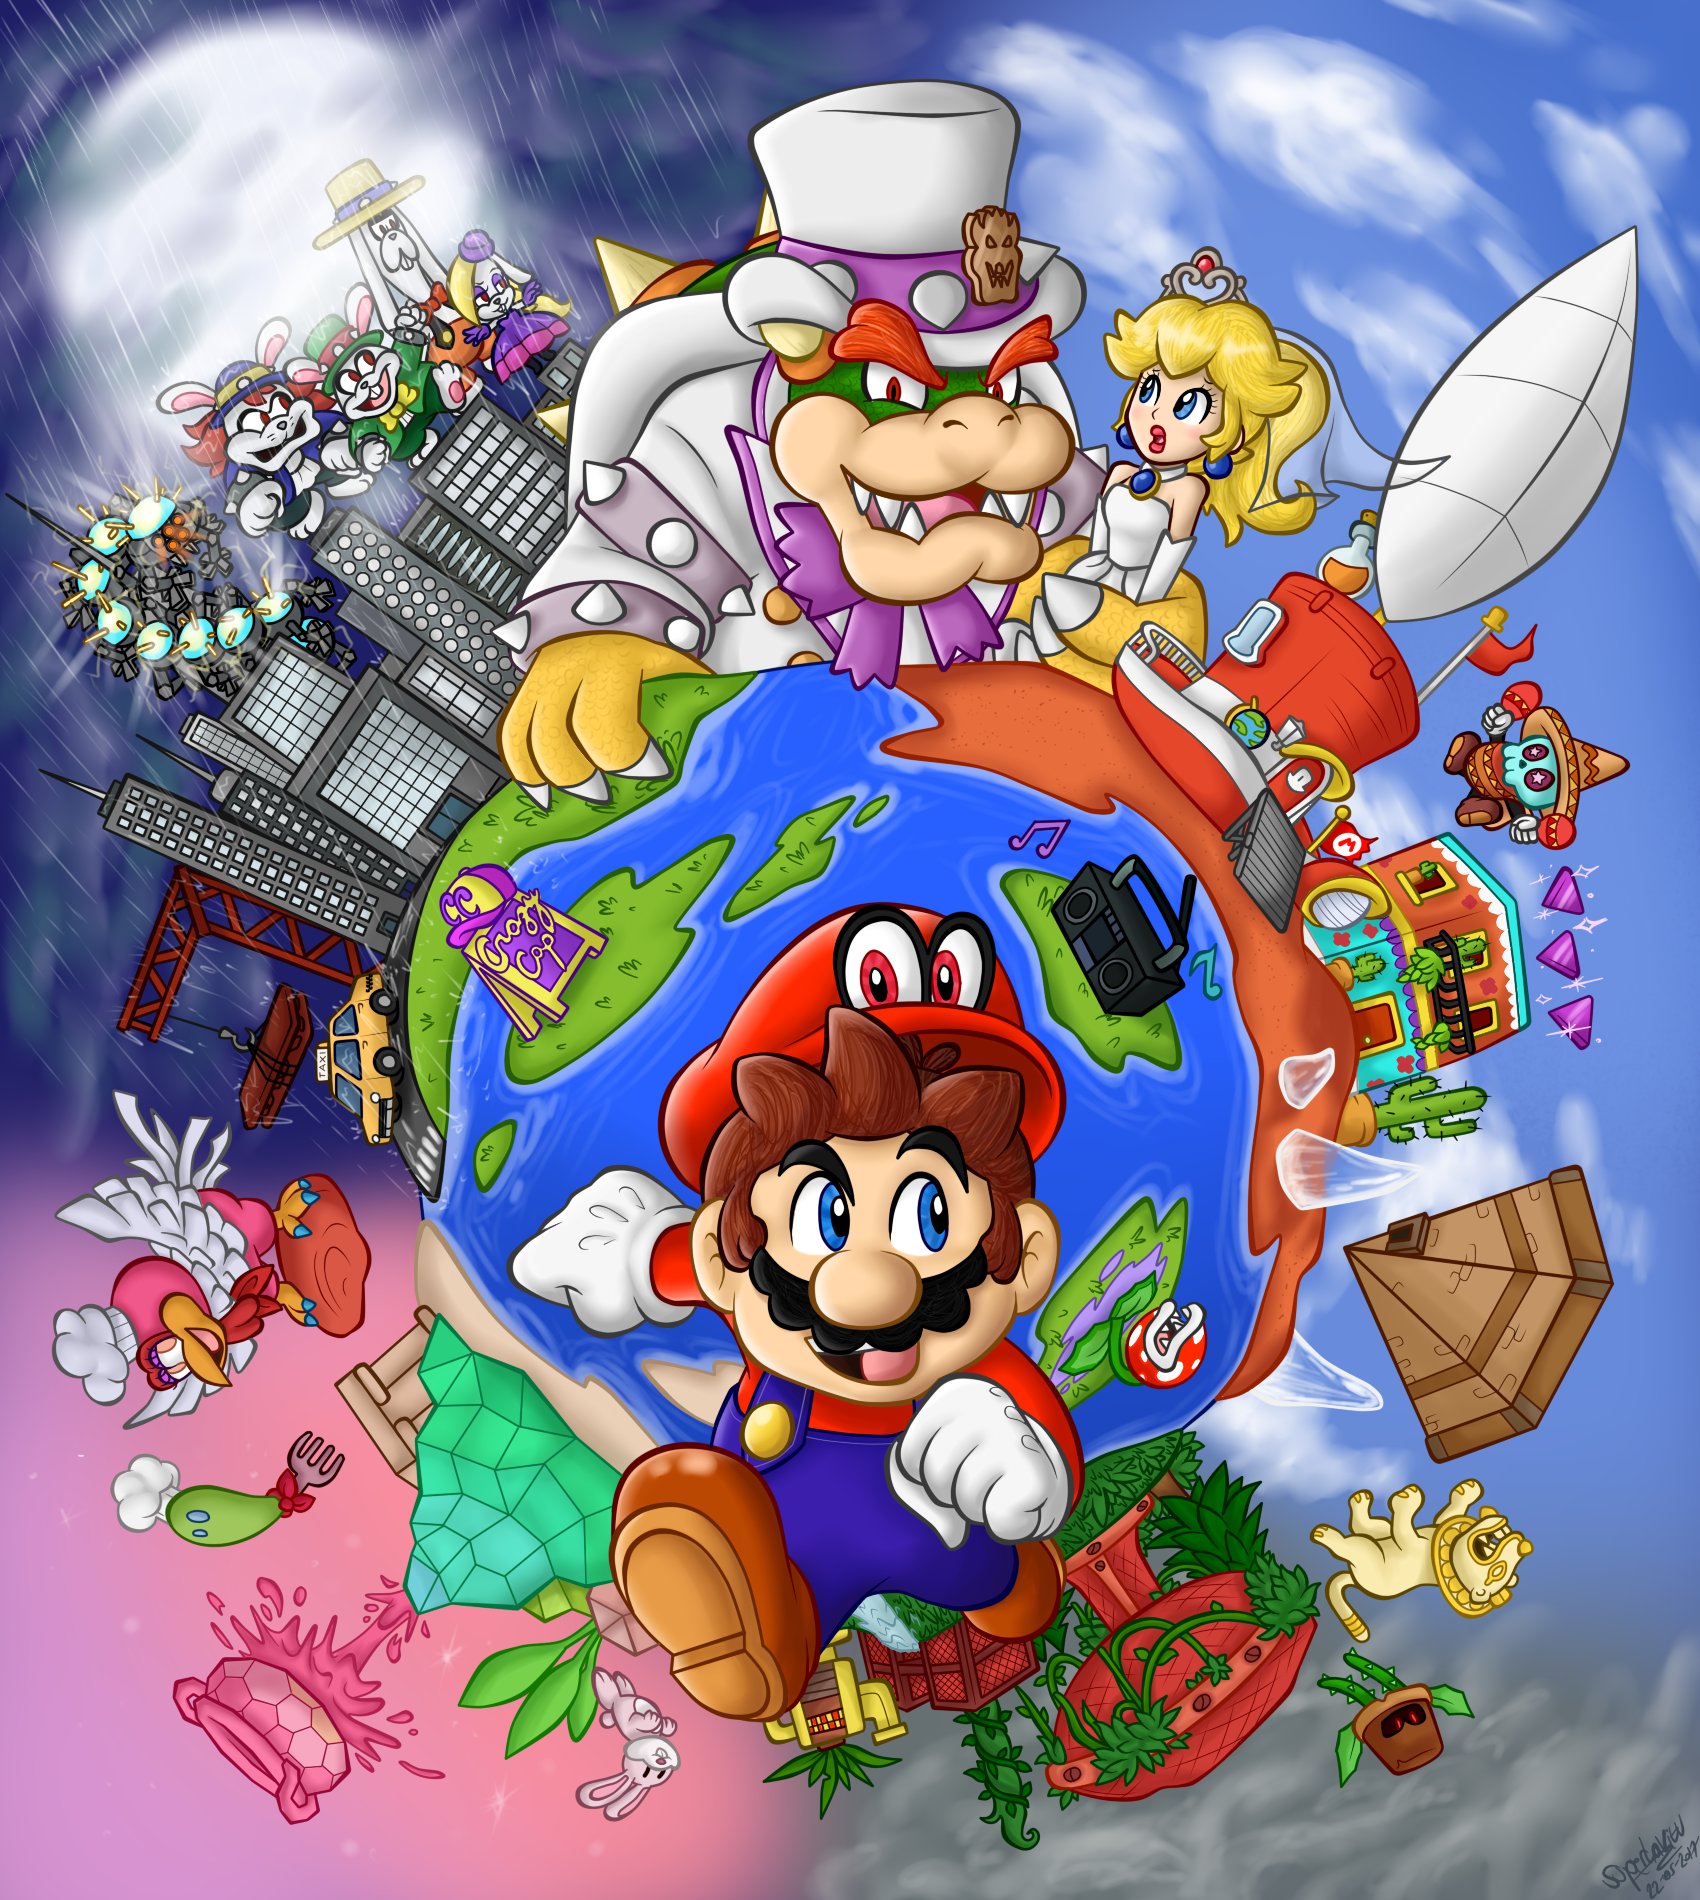 Super Mario Odyssey 2 Concept Art by SLIXTV on Newgrounds